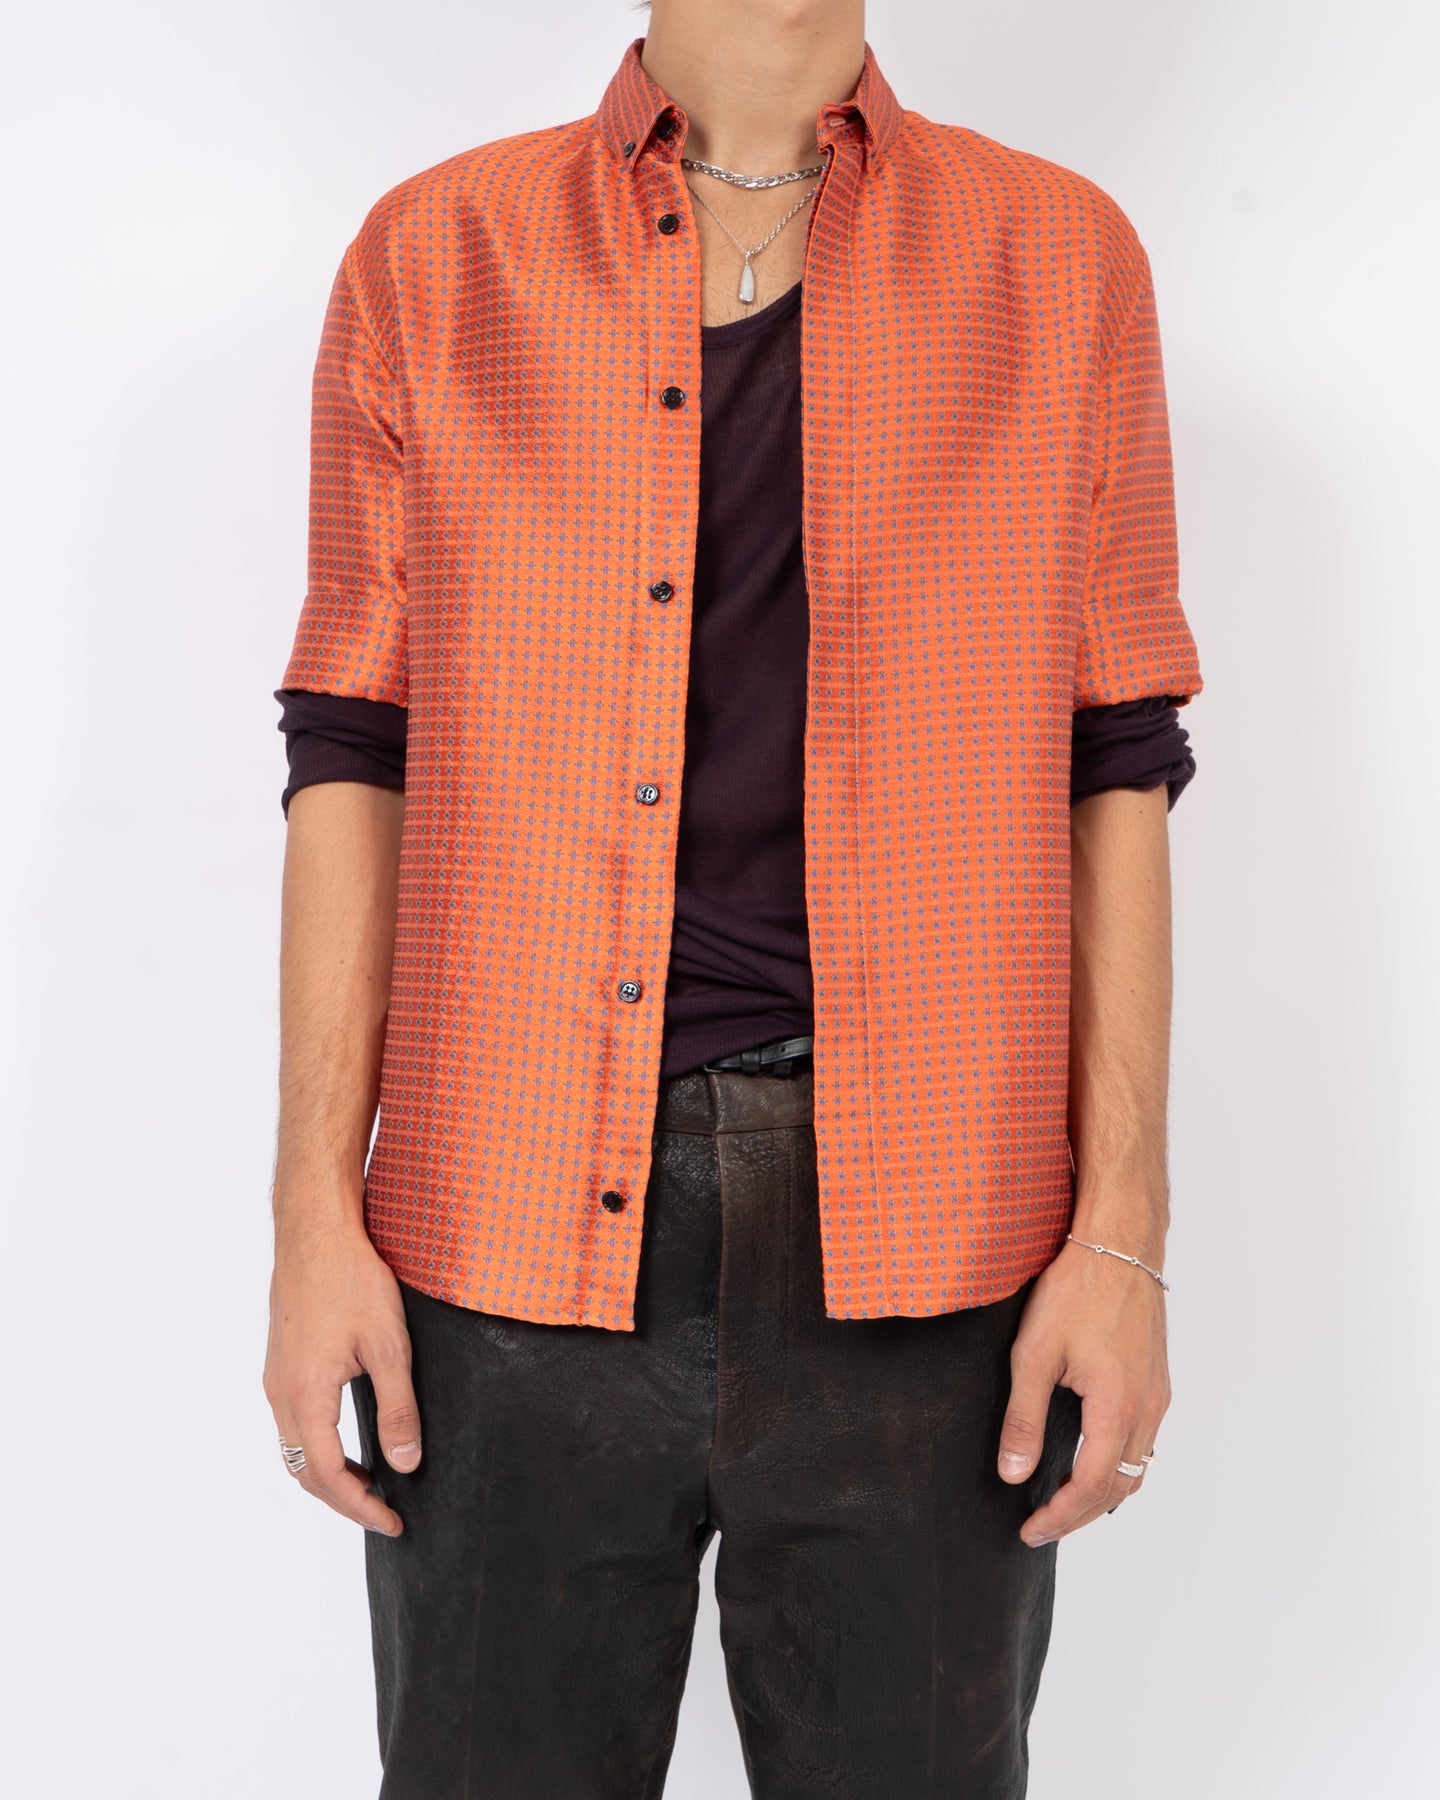 SS17 Orange Inside Out Silk Jacquard Short Sleeve Shirt